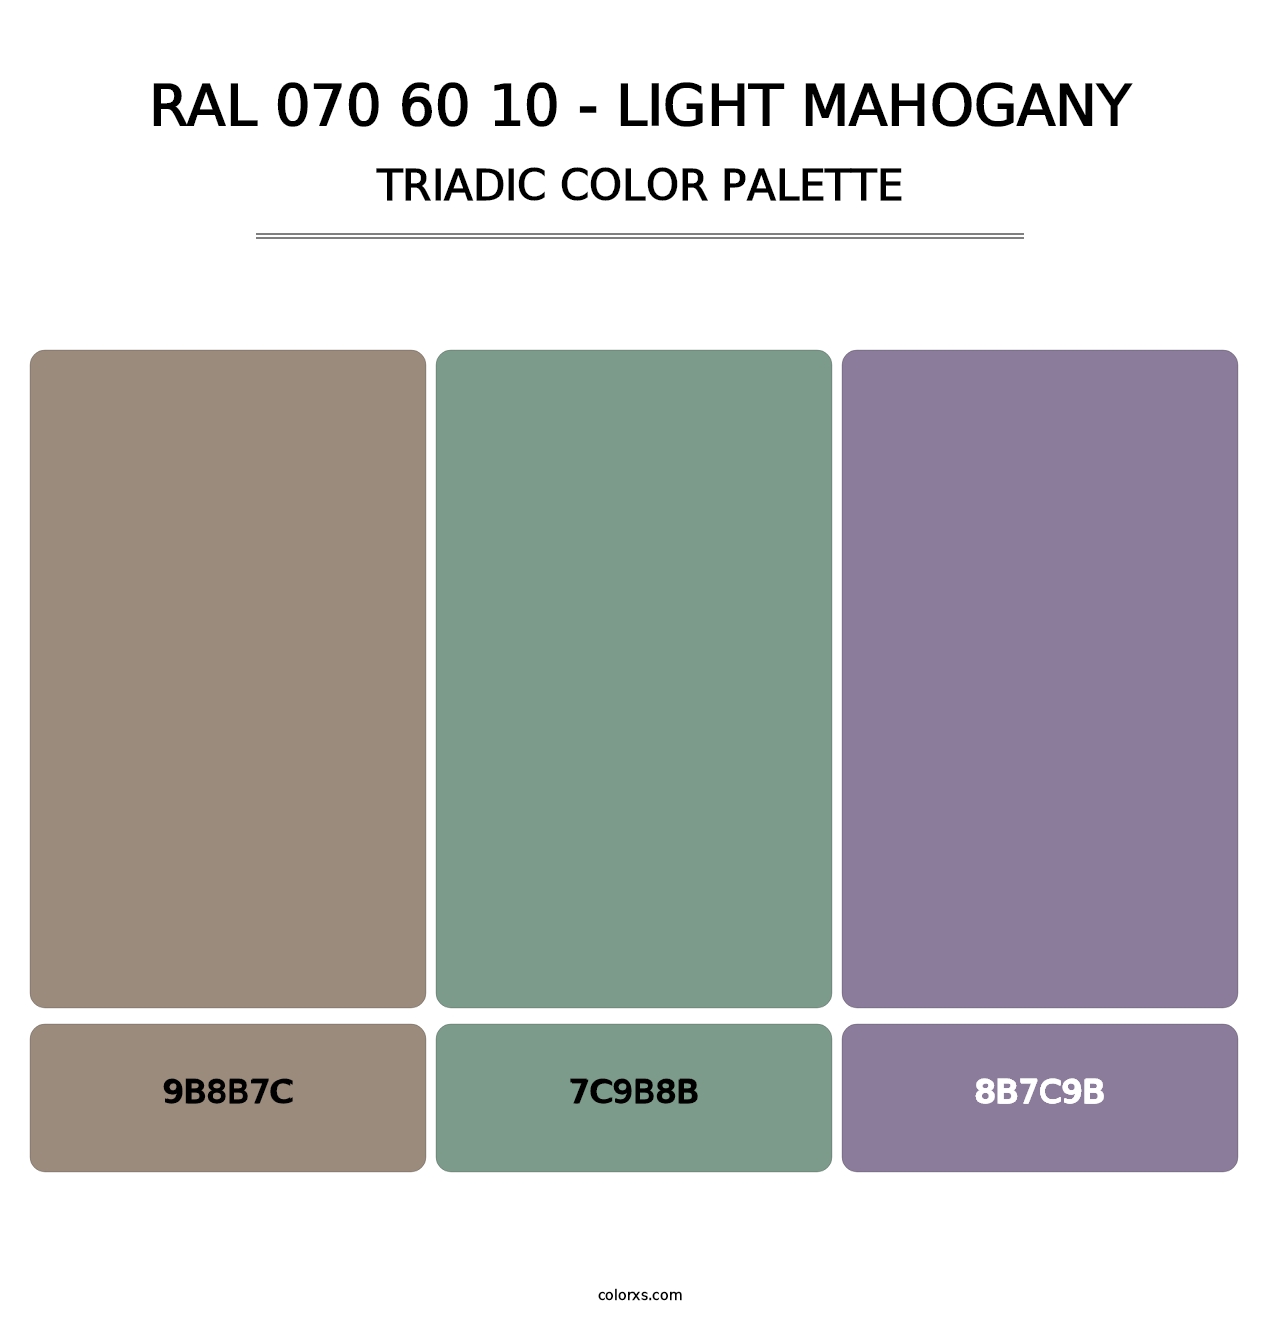 RAL 070 60 10 - Light Mahogany - Triadic Color Palette